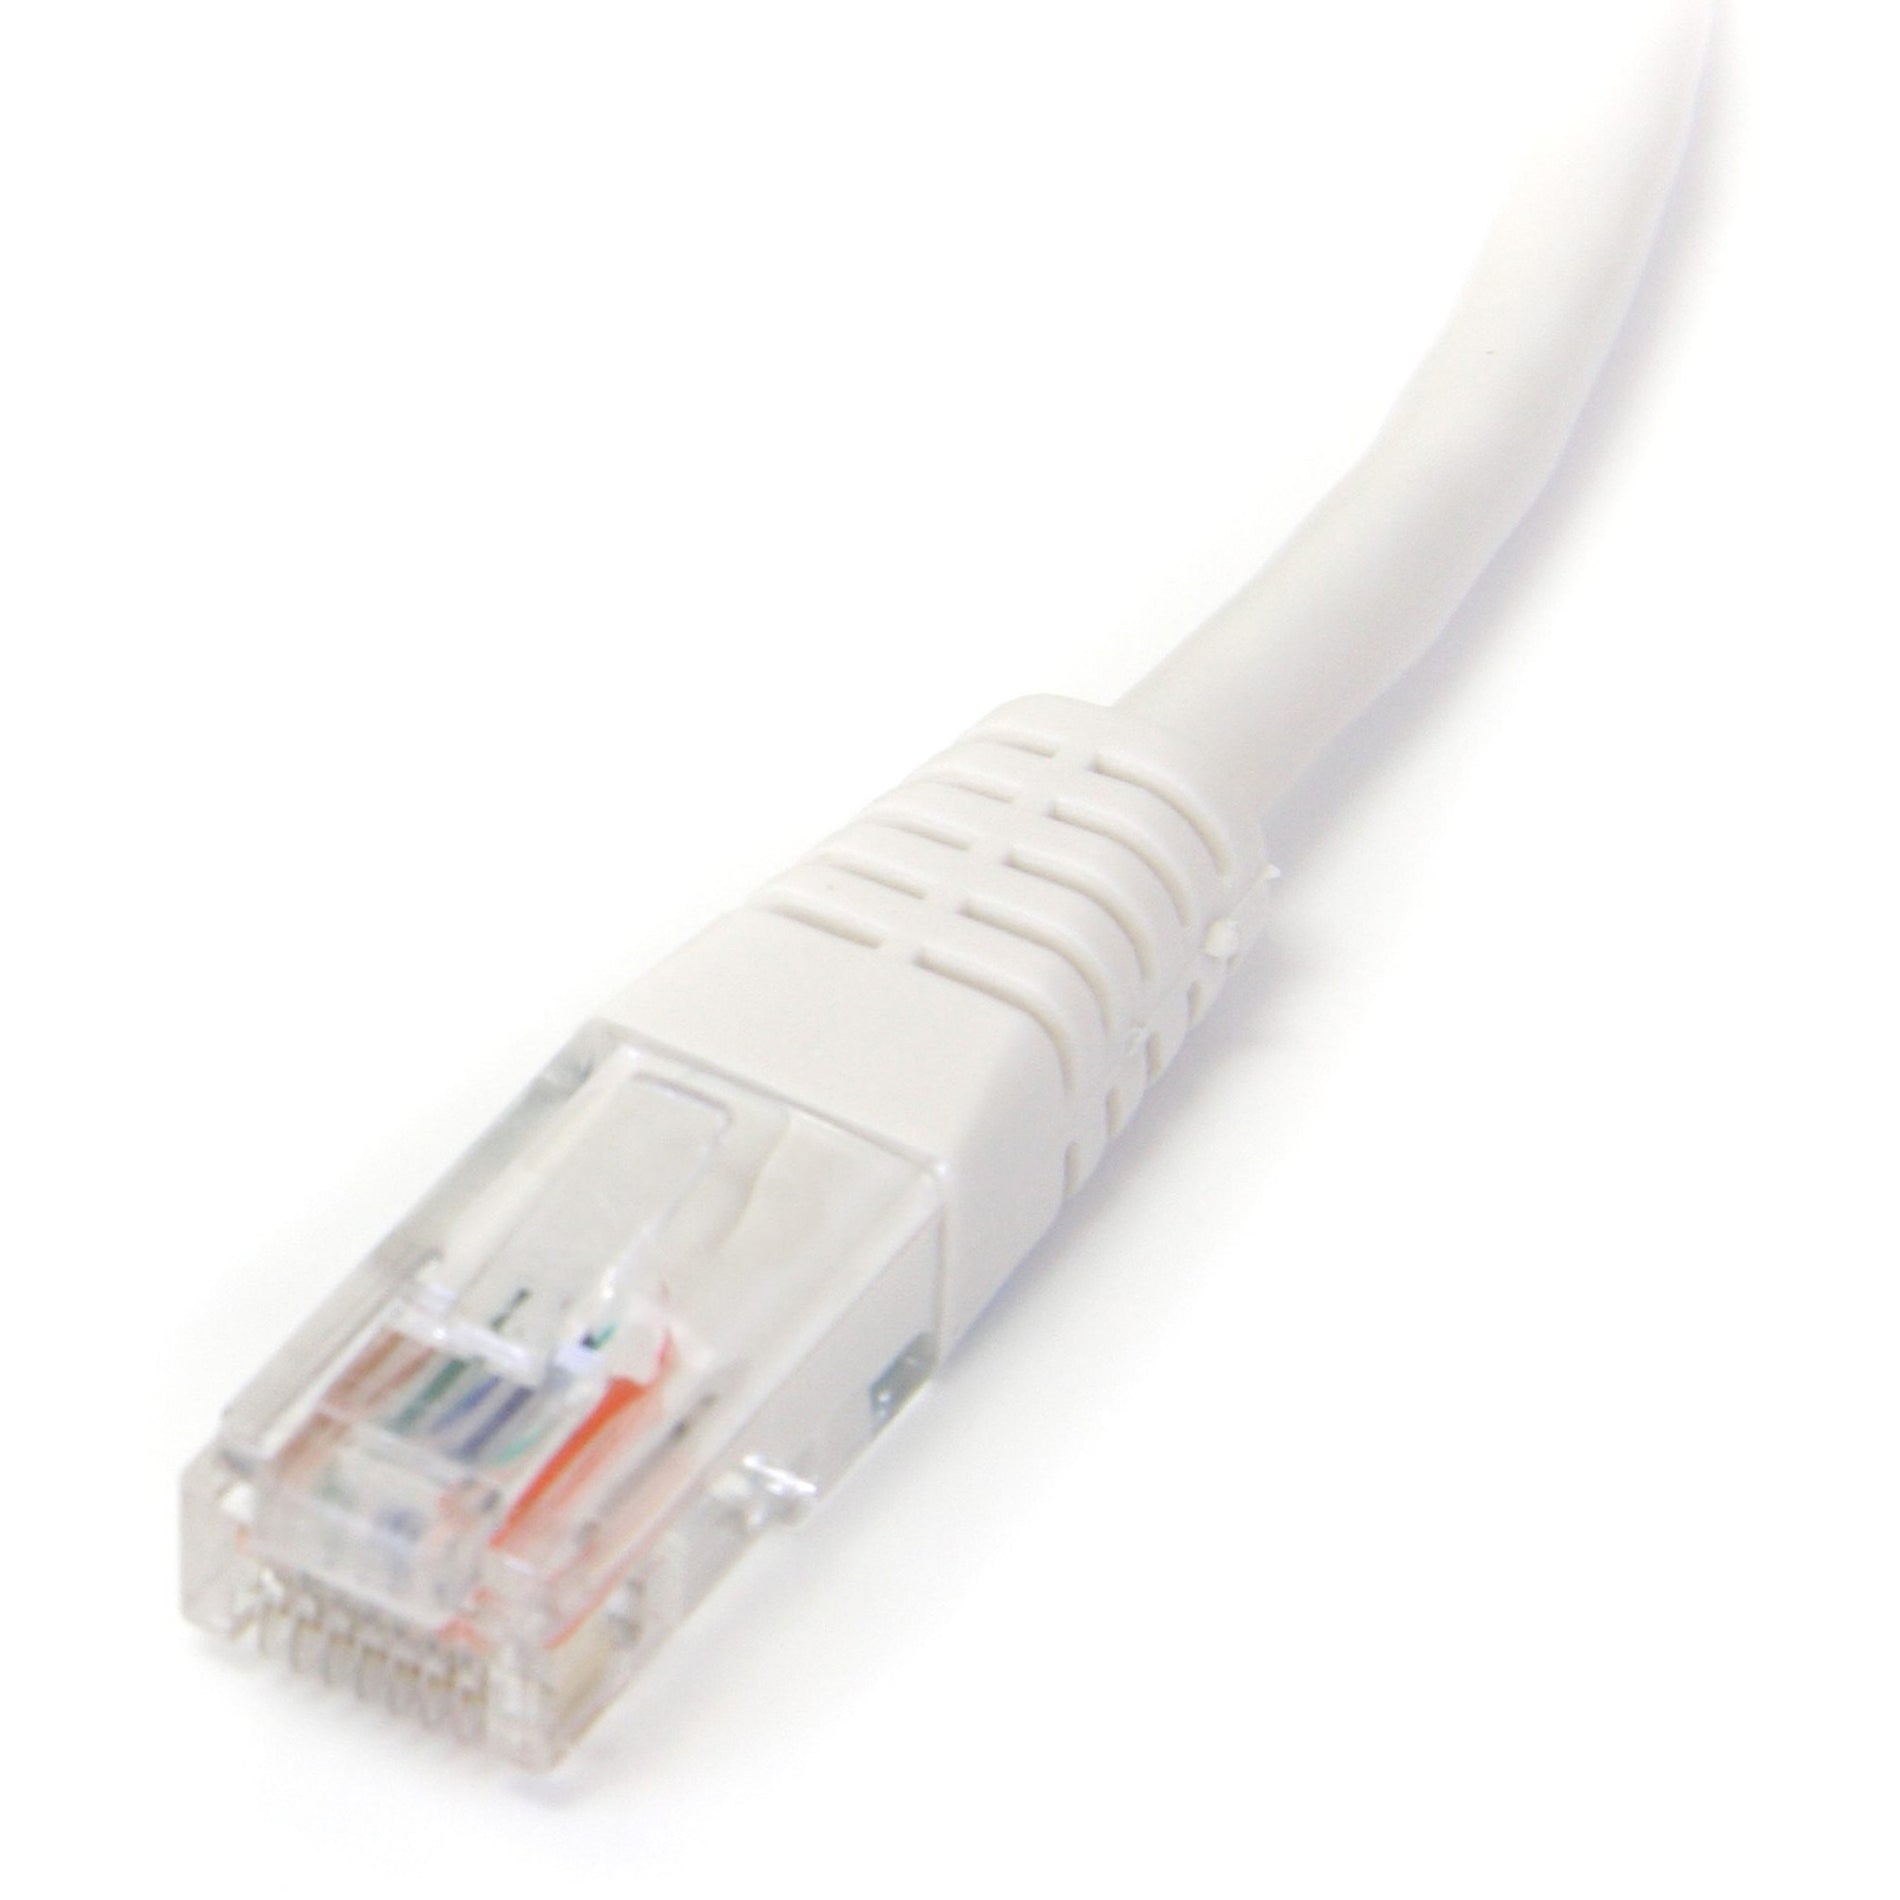 StarTech.com M45PATCH3WH Cat. 5E UTP Patch Cable, 3 ft White, Molded, Lifetime Warranty